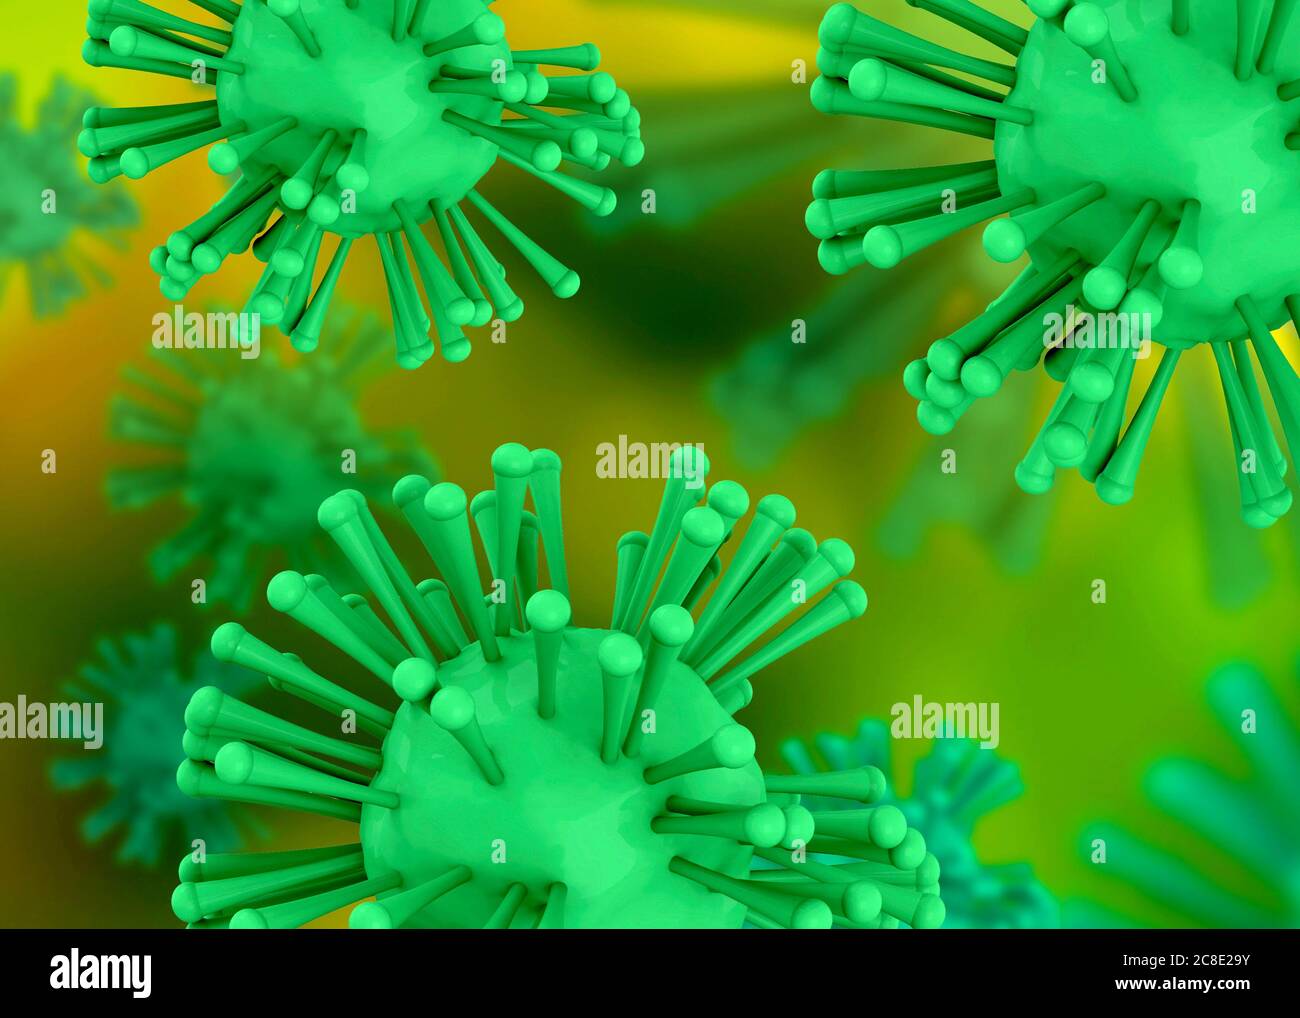 The Danger of Virus infection - 3D Stock Photo